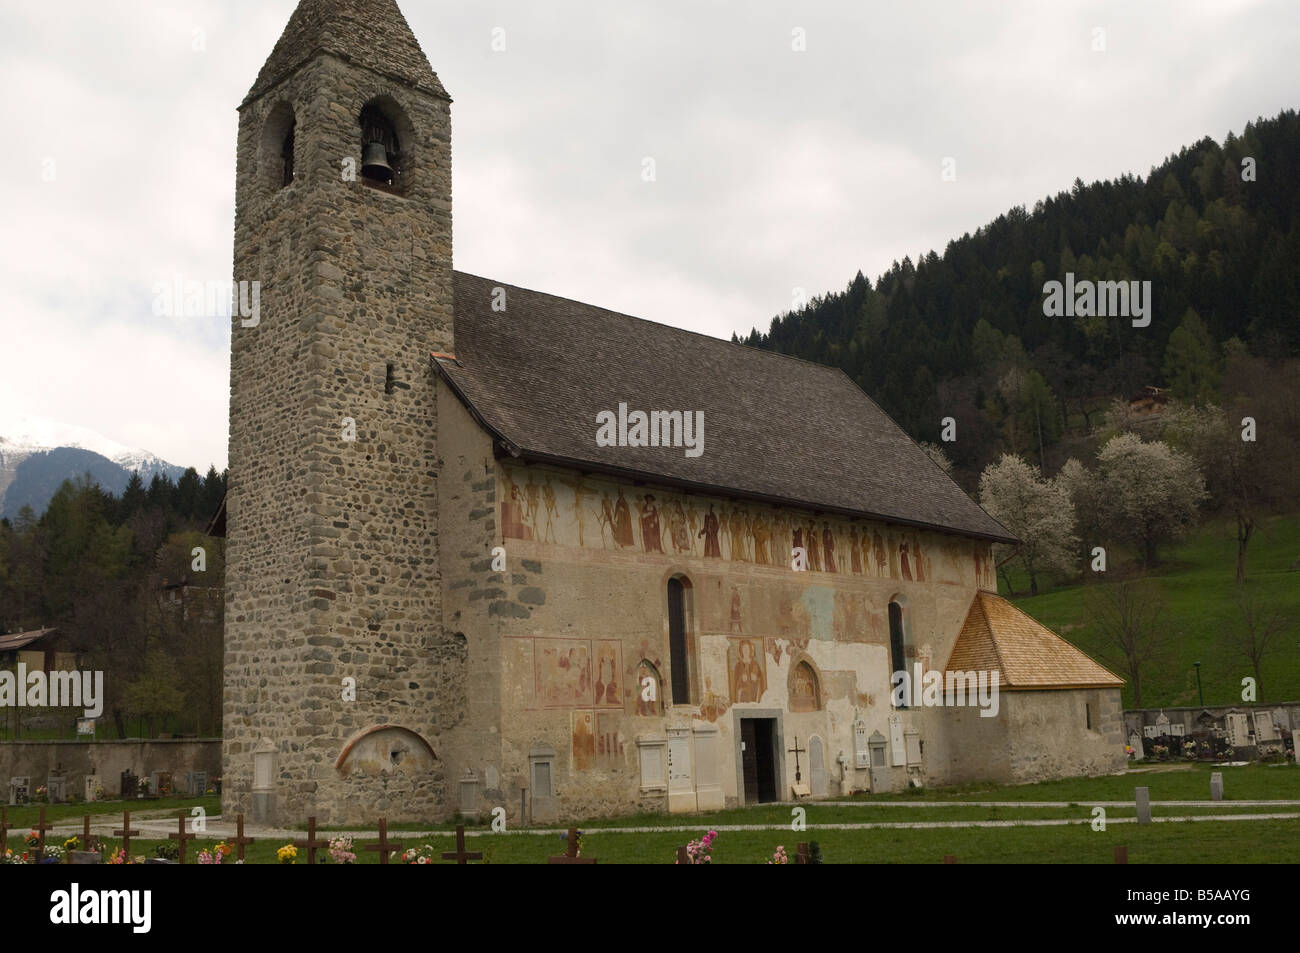 Wall frescoes on the exterior of the ancient church of Chiesa di Vigilio, Pinzolo, Trentino-Alto Adige, Italy, Europe Stock Photo